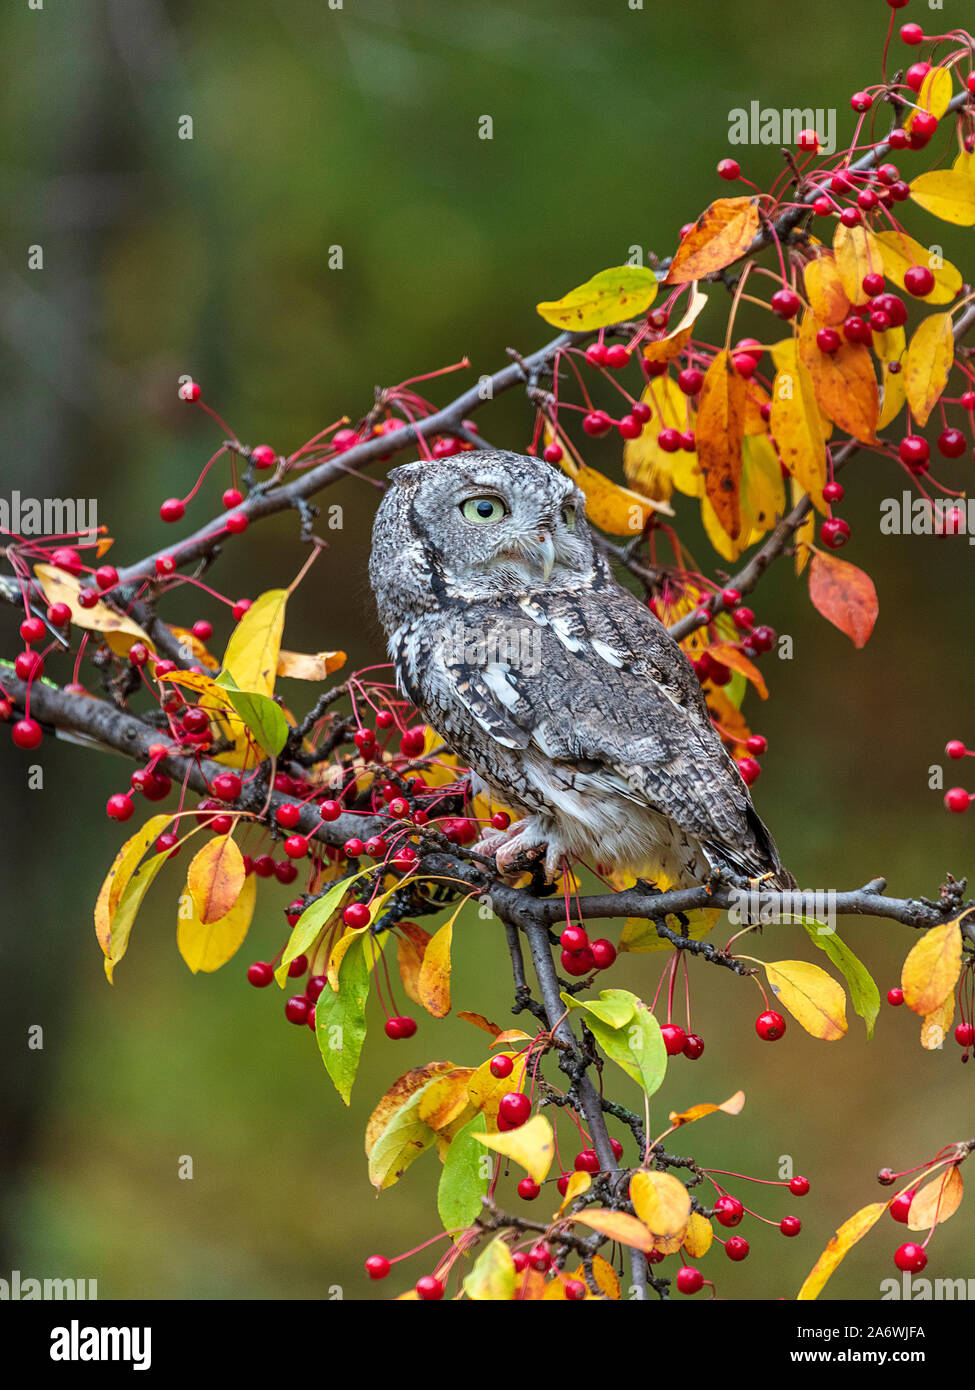 Eastern Screech Owl (Megascops asio), graue Phase, die im Baum, Herbst gehockt, E Nordamerika, von James D Coppinger/Dembinsky Foto Assoc Stockfoto